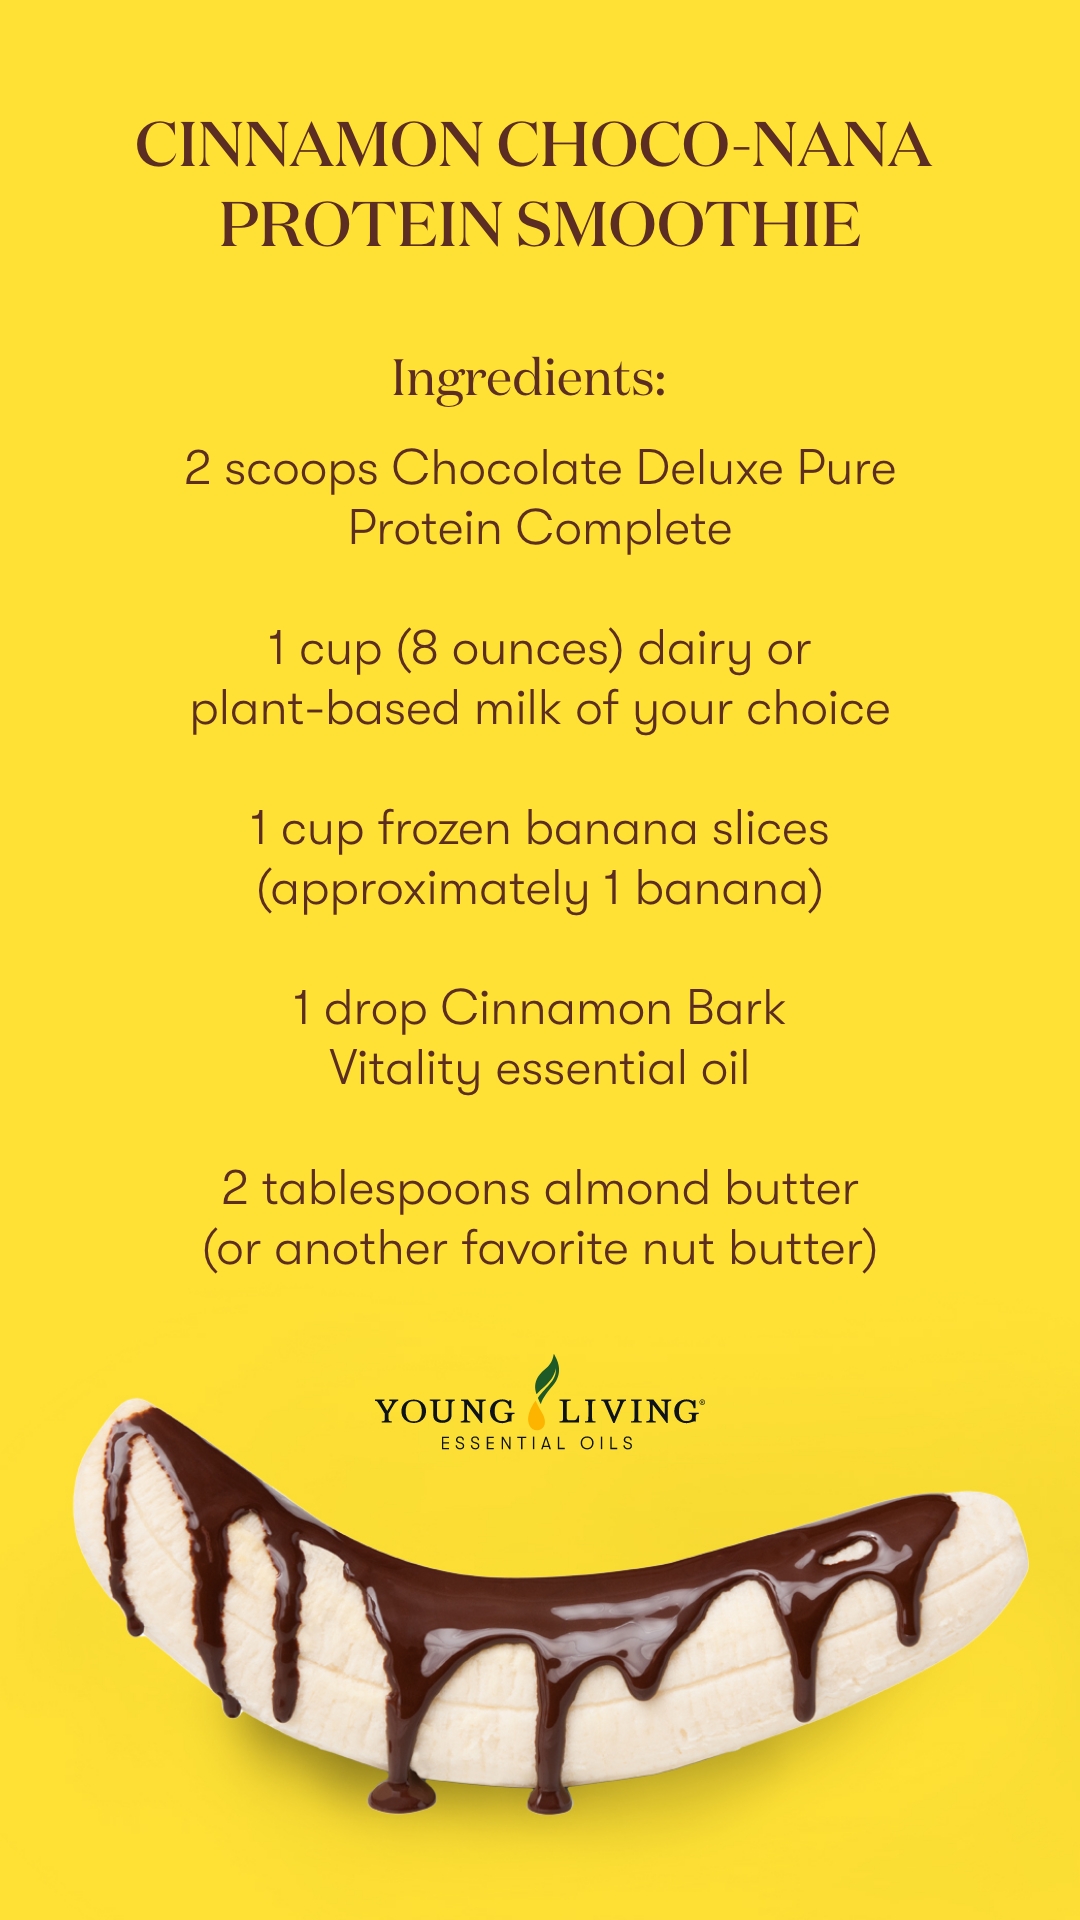 Cinnamon Choco-Nana protein smoothie - Young Living Lavender Life Blog 